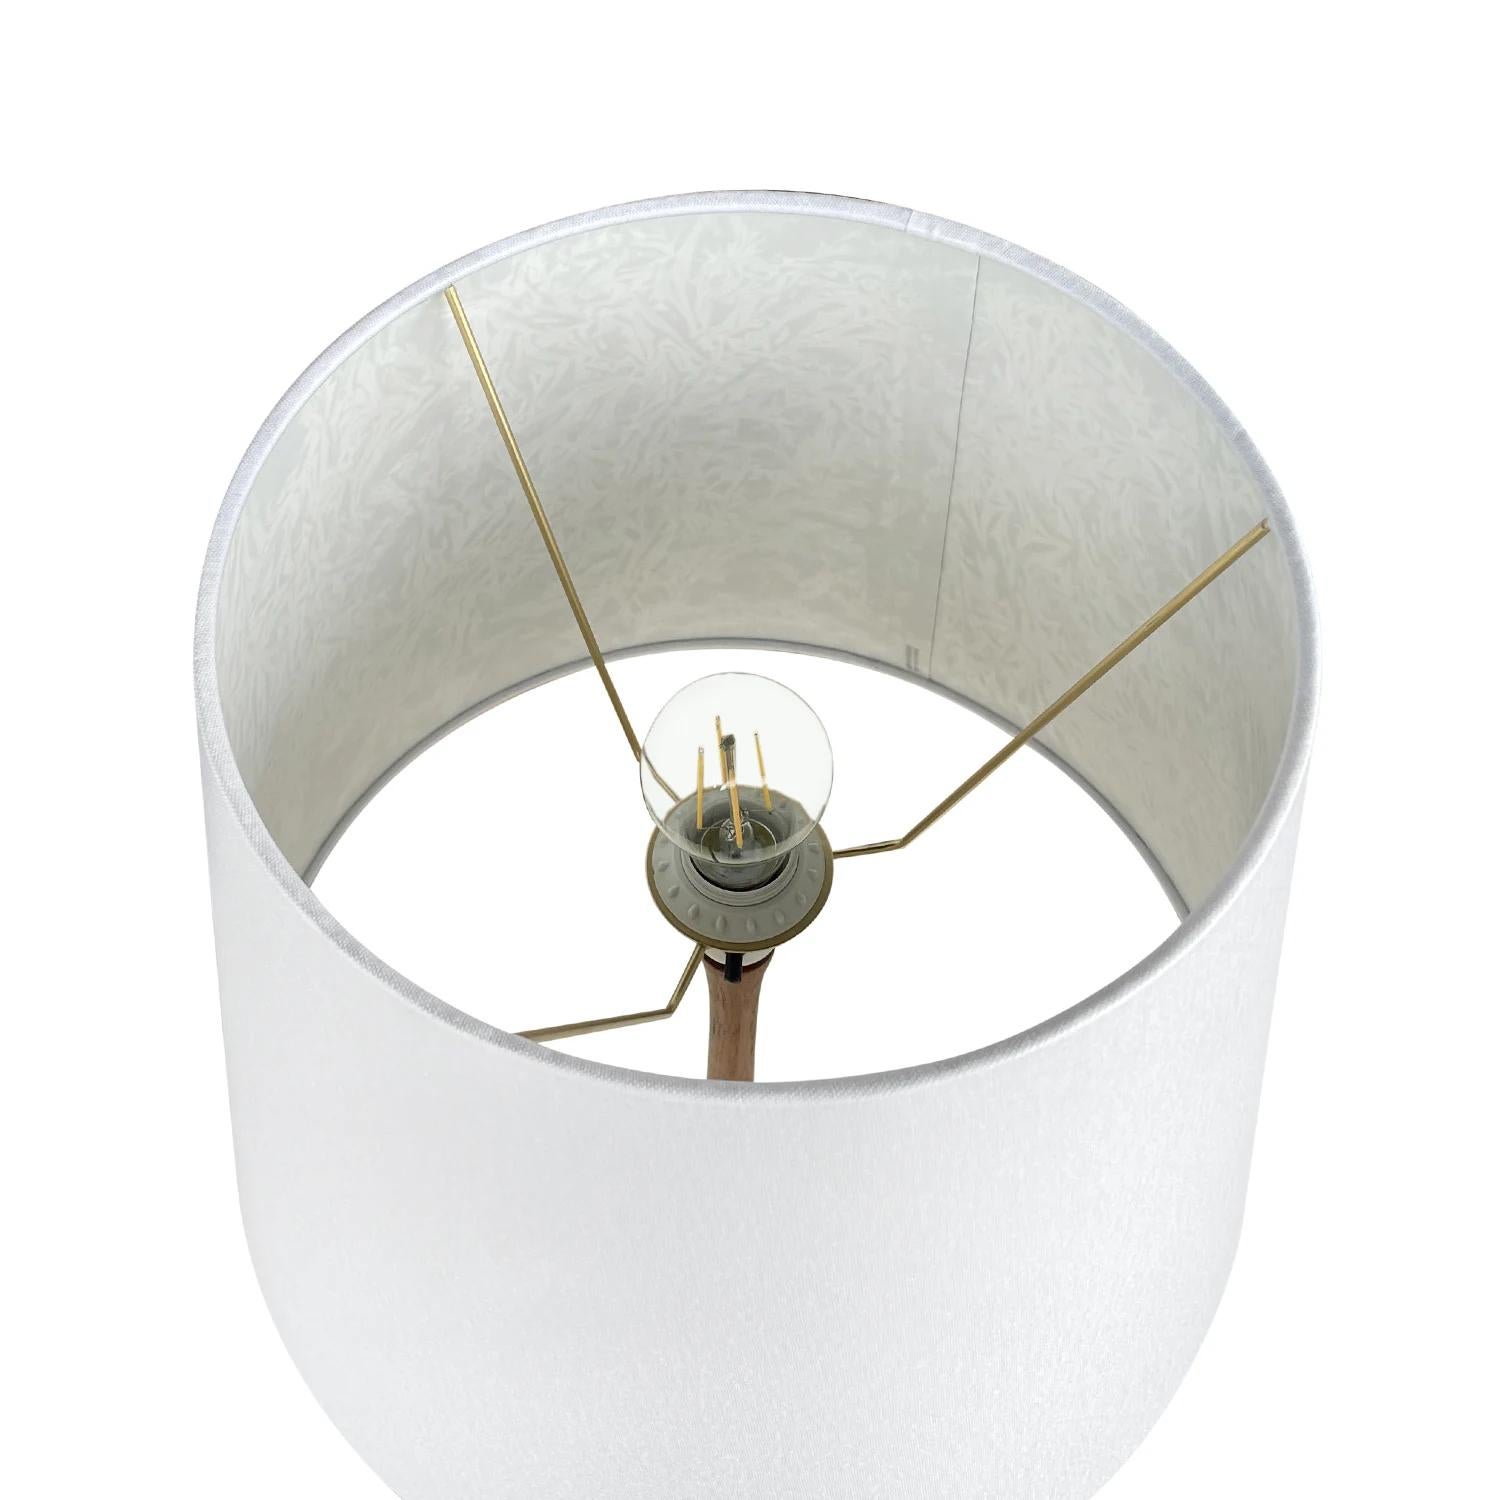 Hand-Carved 20th Century Danish Modern Teakwood Floor Lamp - Vintage Scandinavian Light For Sale